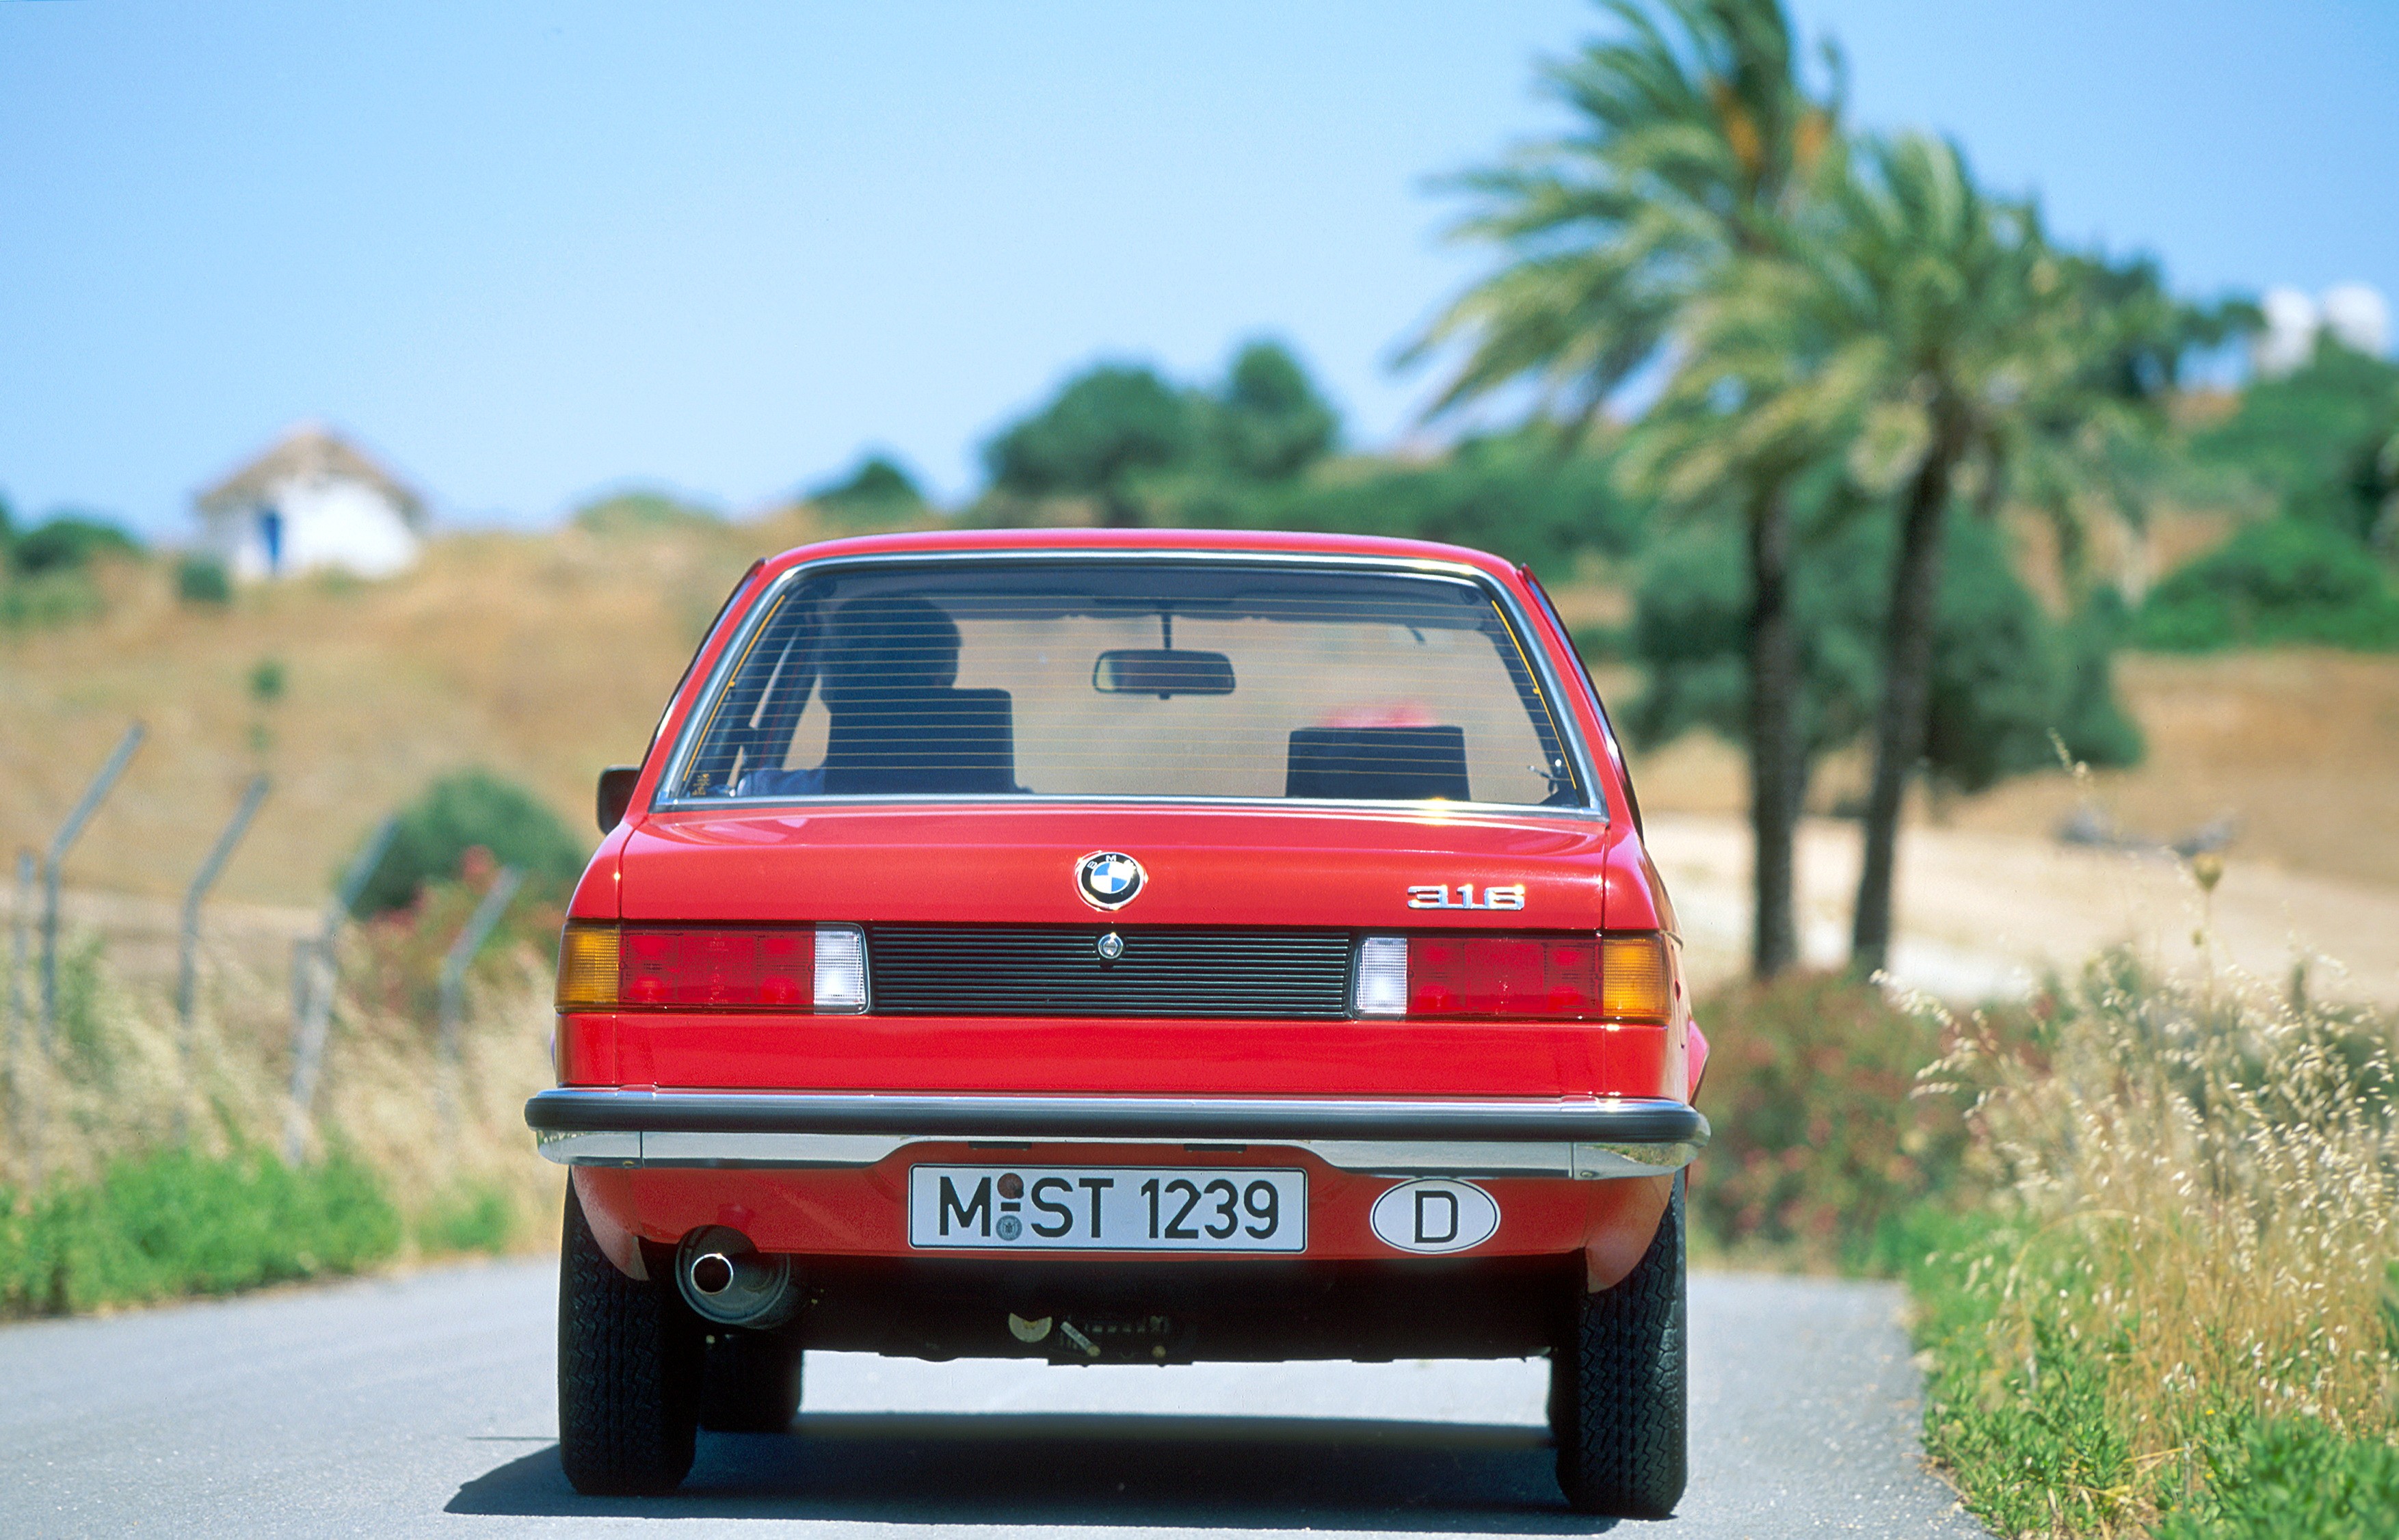 BMW 3 Series Coupe (E21) - 1975, 1976, 1977, 1978, 1979, 1980, 1981, 1982, 1983 - autoevolution